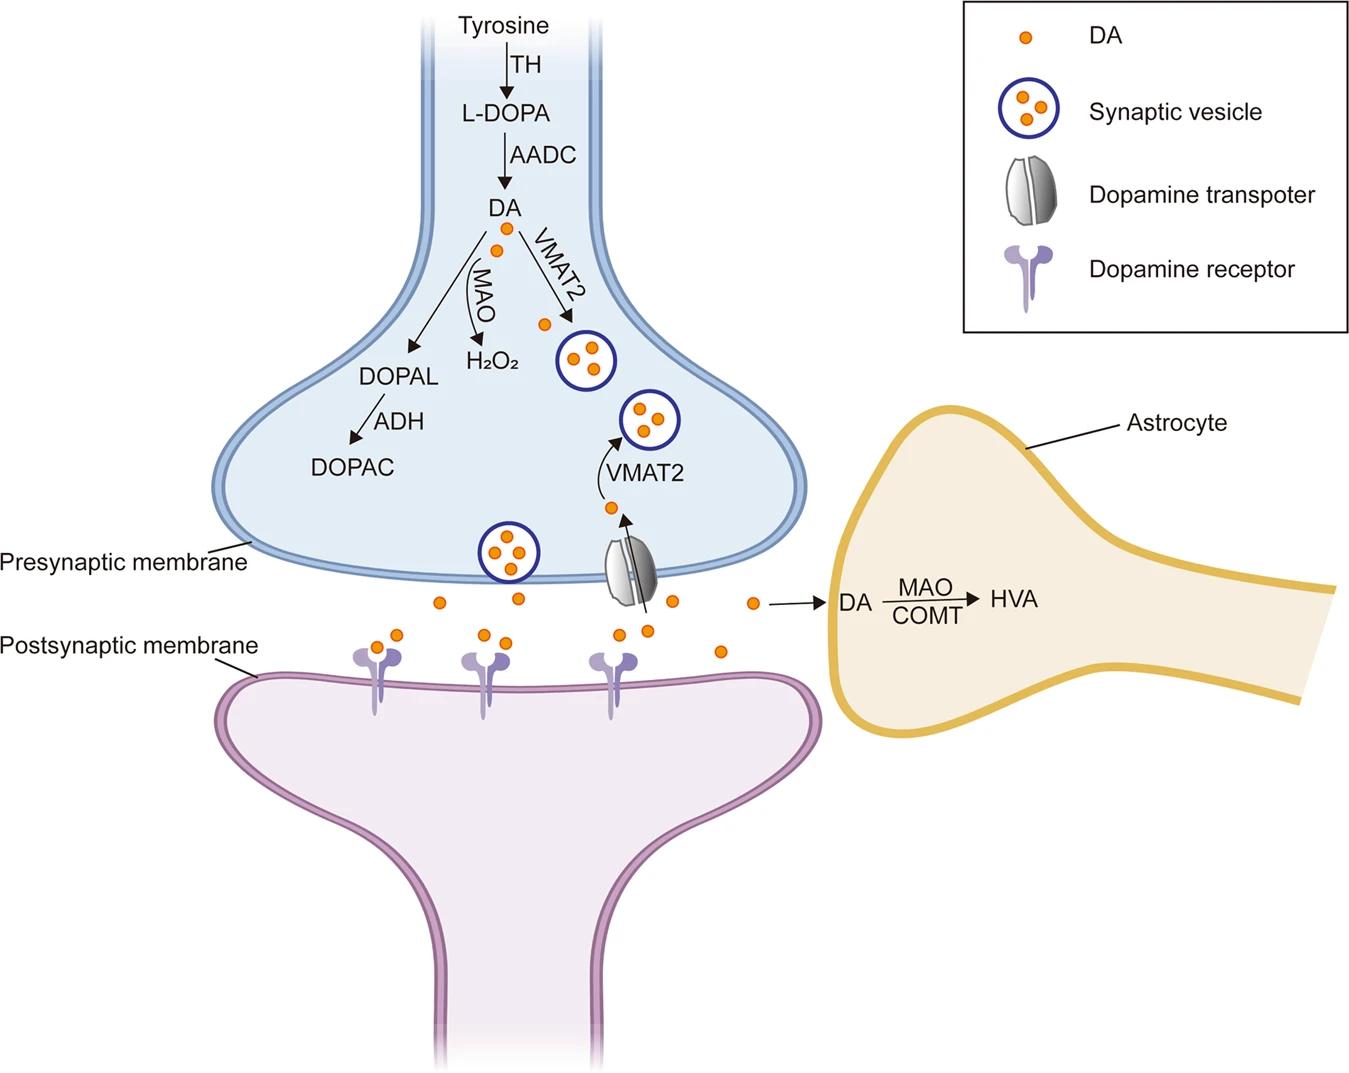 Dopamine receptors mediating dopamine metabolism in dopaminergic neurons